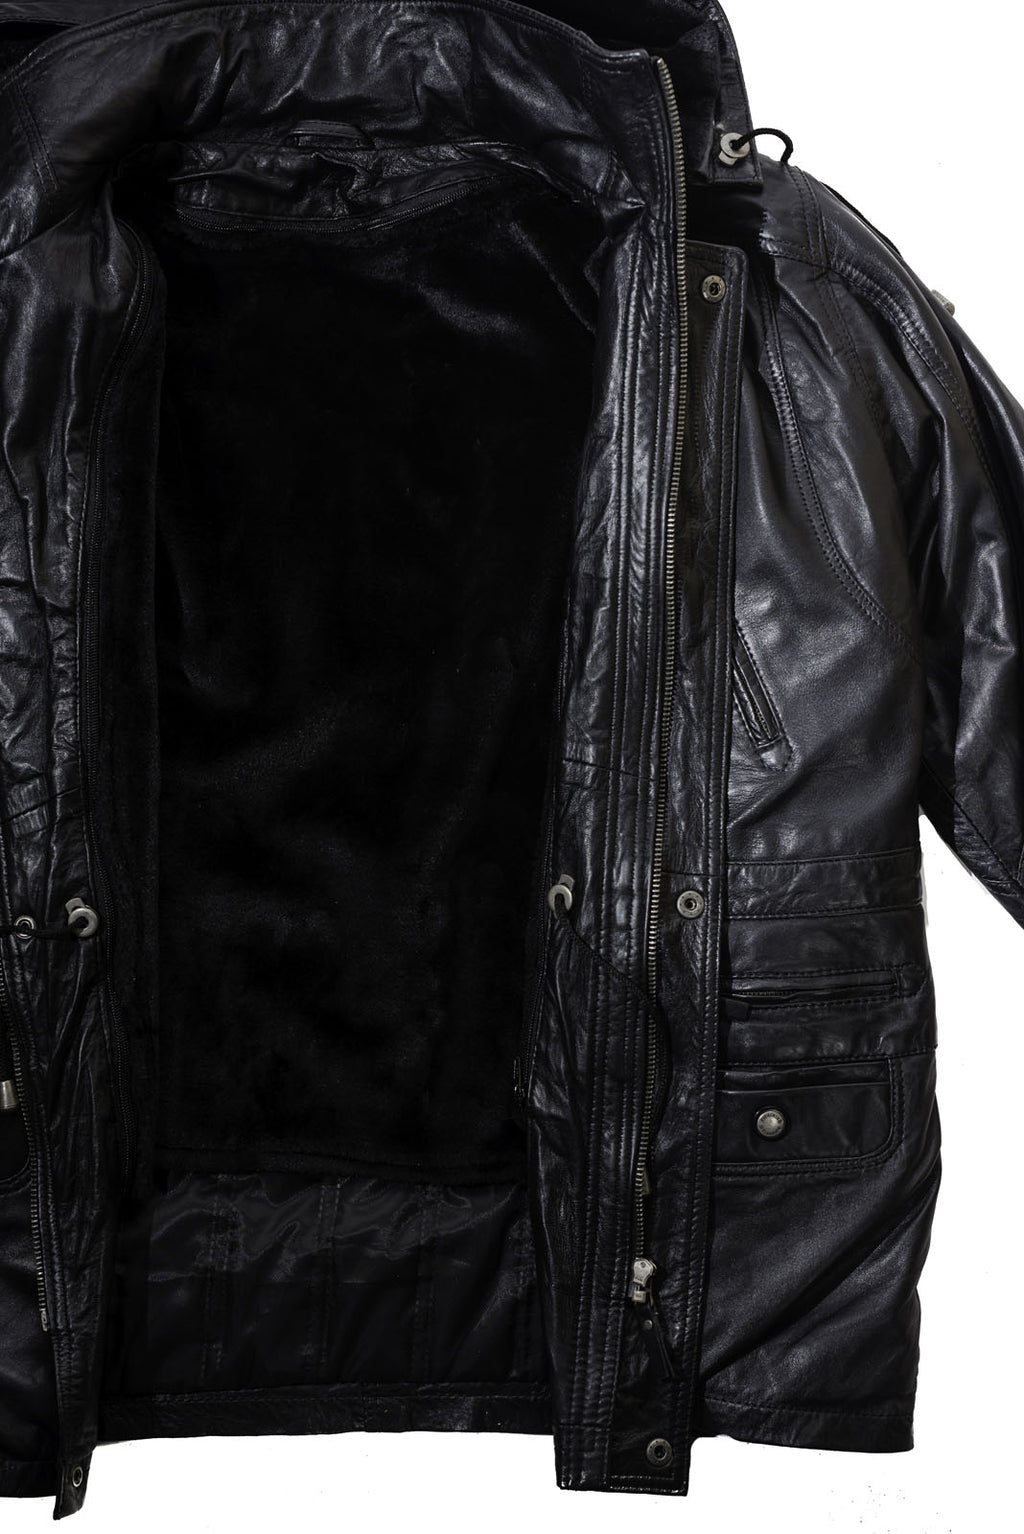 Men's Black Multi-Season Leather Coat with Detachable Hood: Christiano